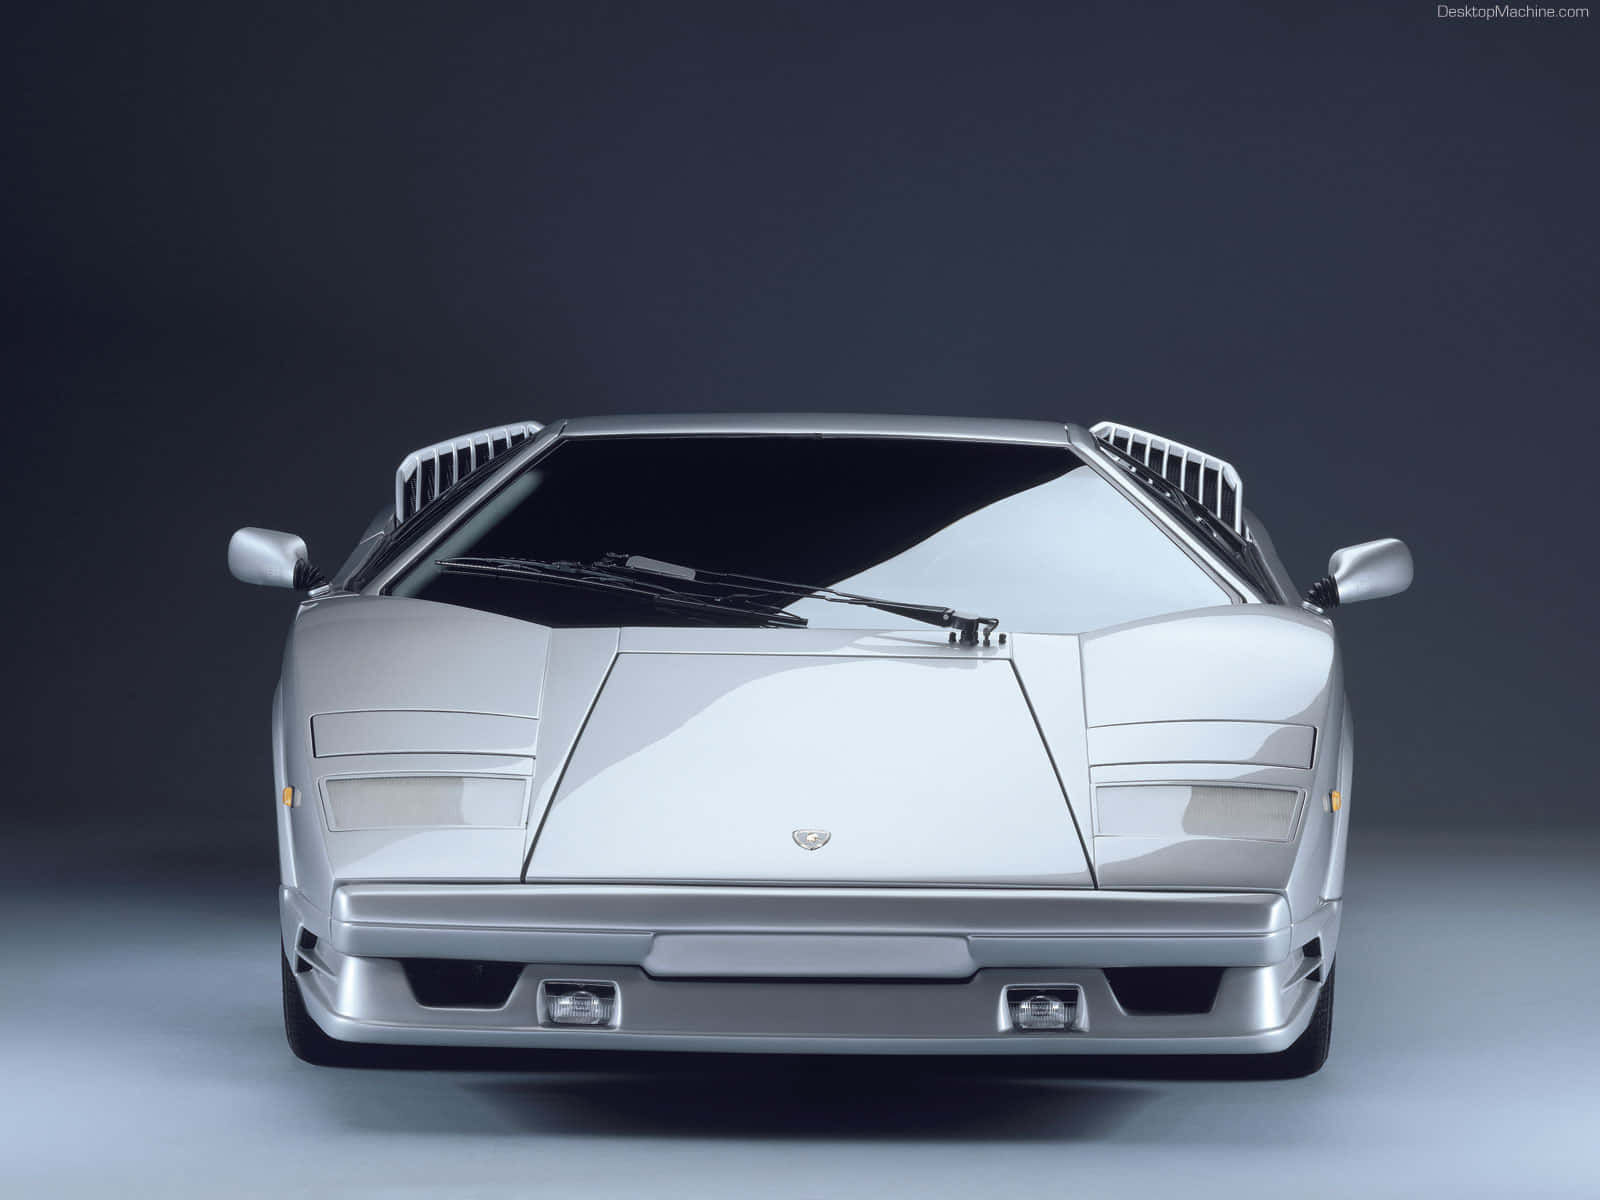 Sleek and Iconic Lamborghini Countach Wallpaper